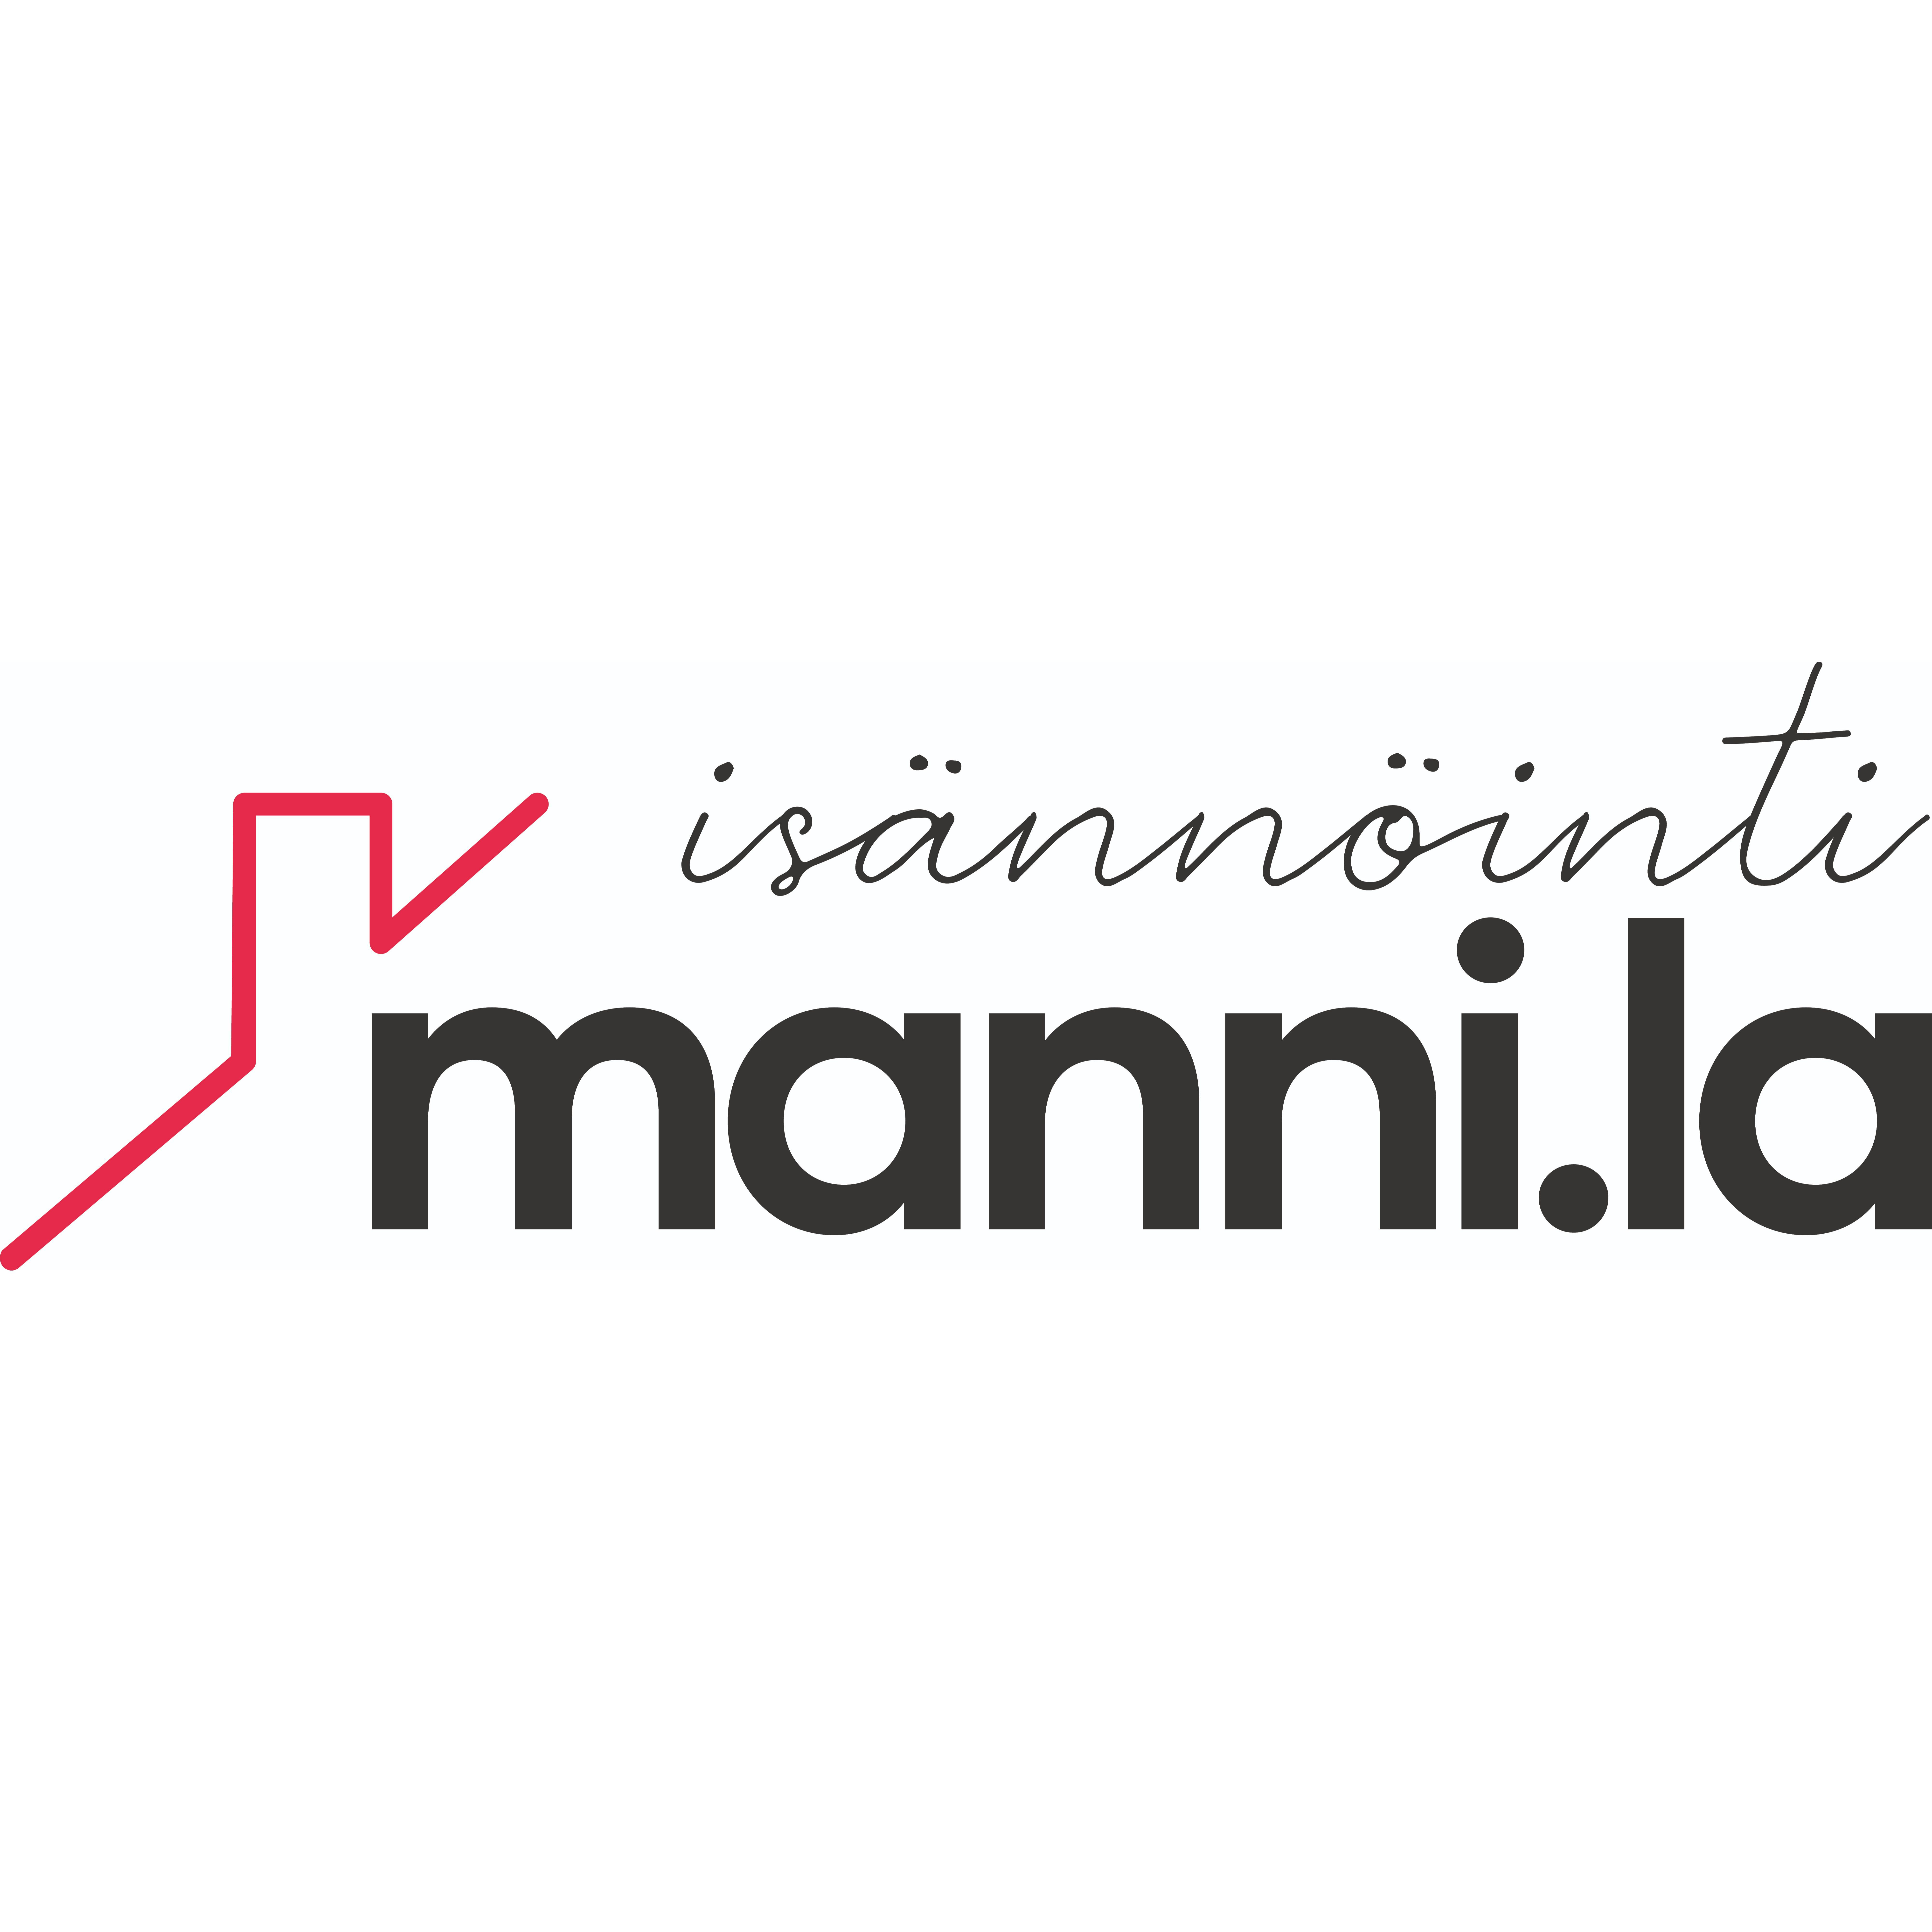 Isännöinti Mannila Logo